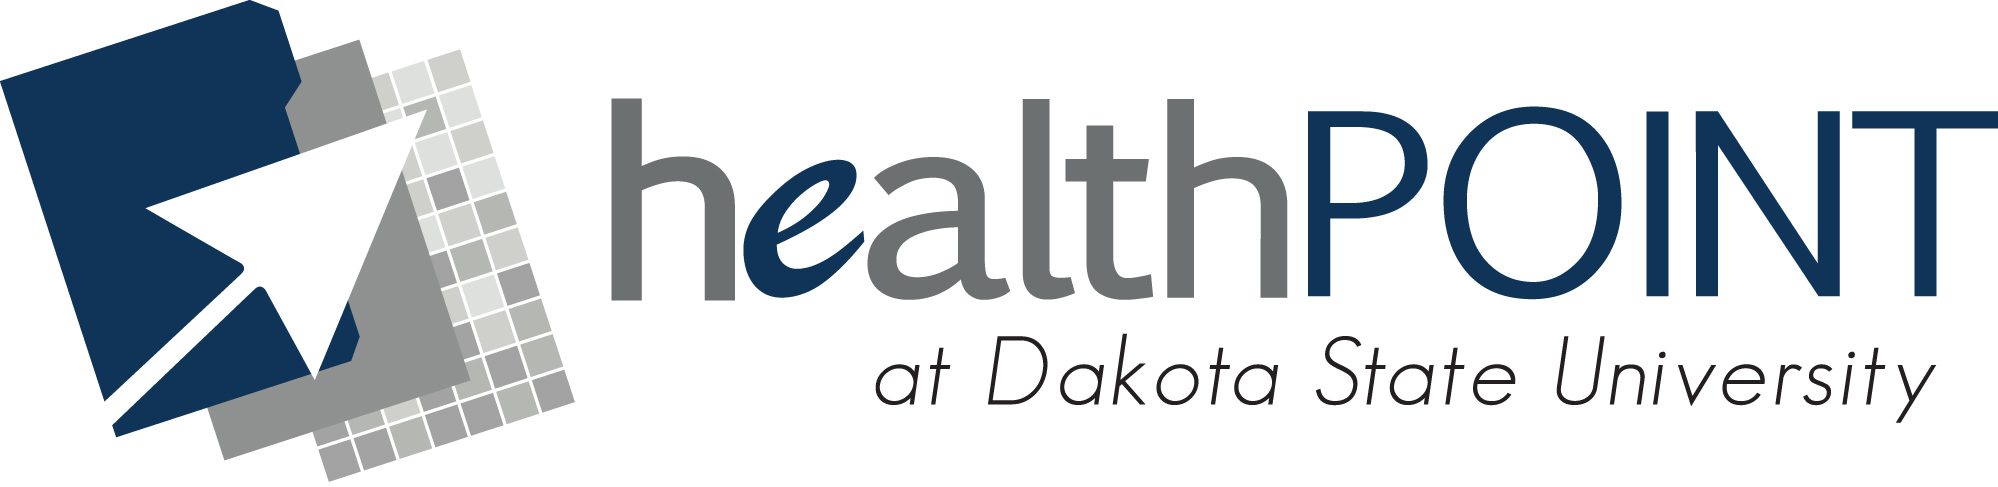 HealthPoint at Dakota State University logo